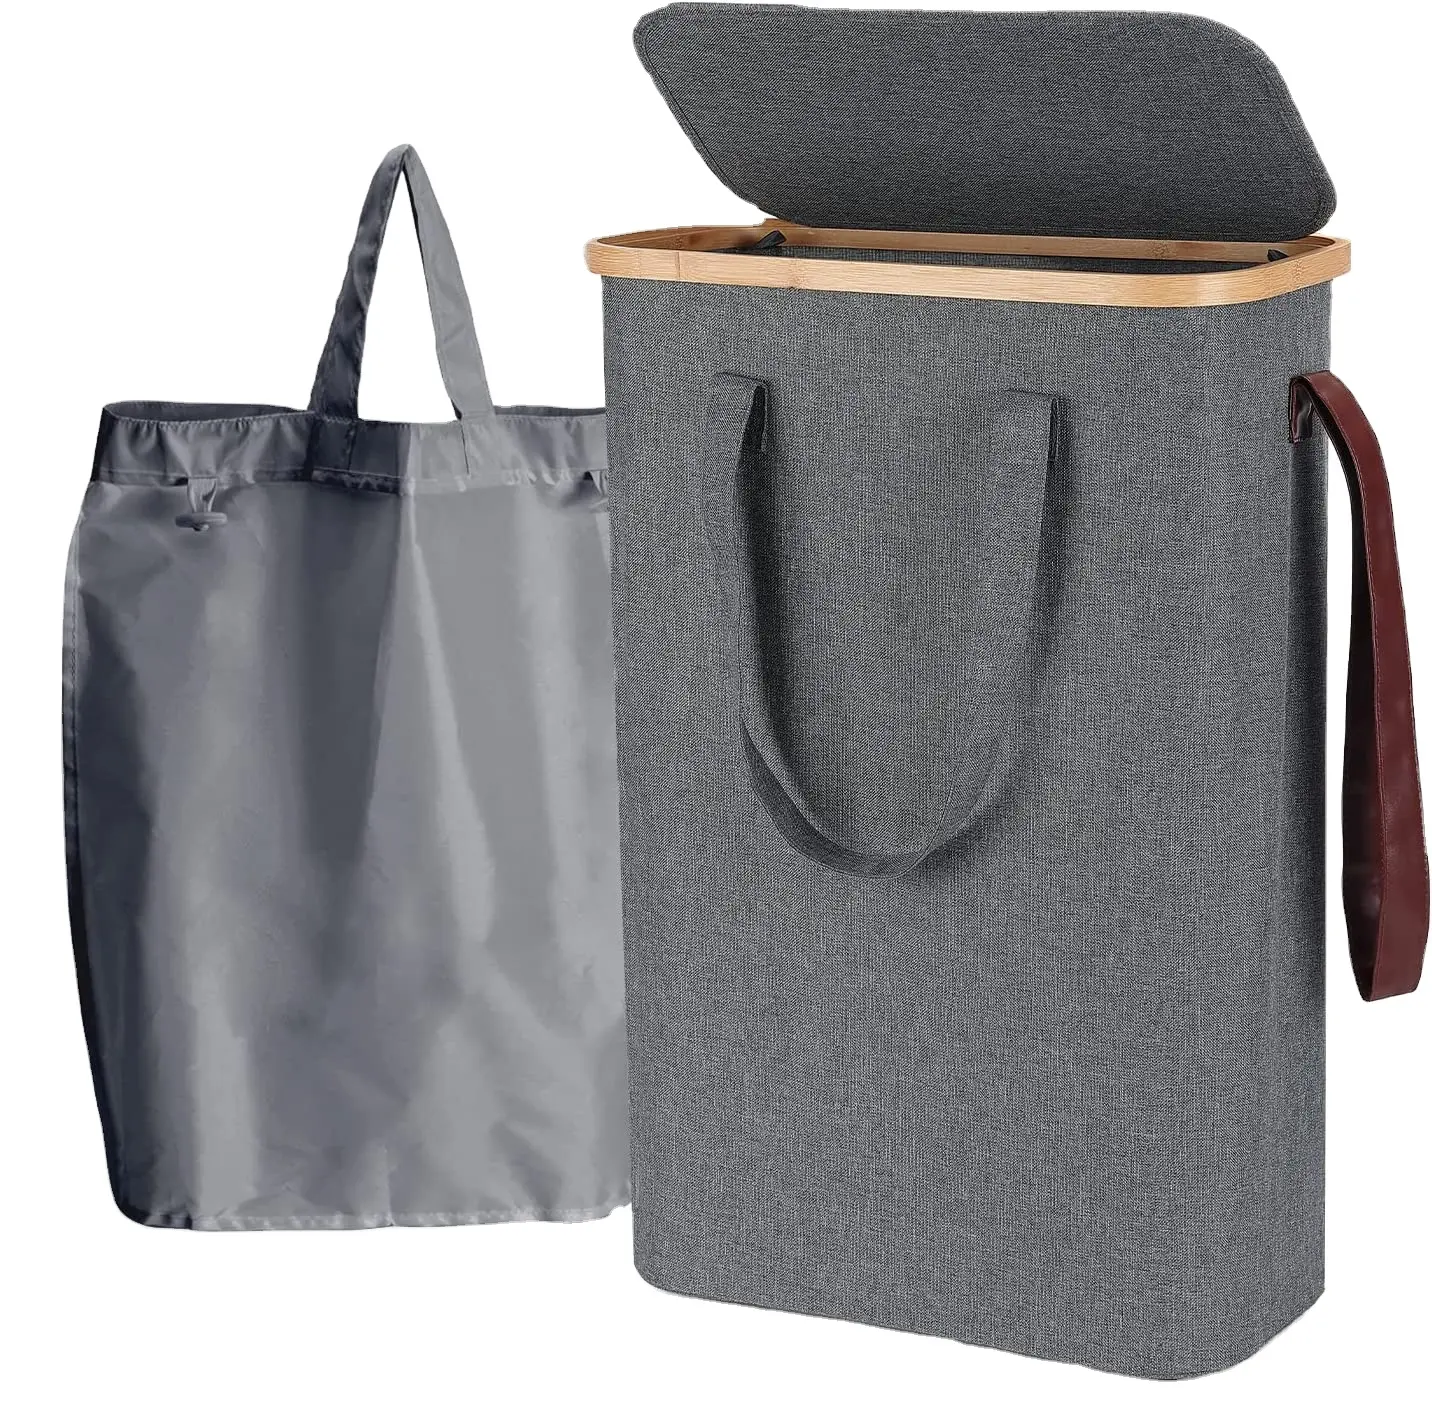 New Design Felt Laundry Basket Cotton Leather Handle Storage Basket Clothing Storage Basket